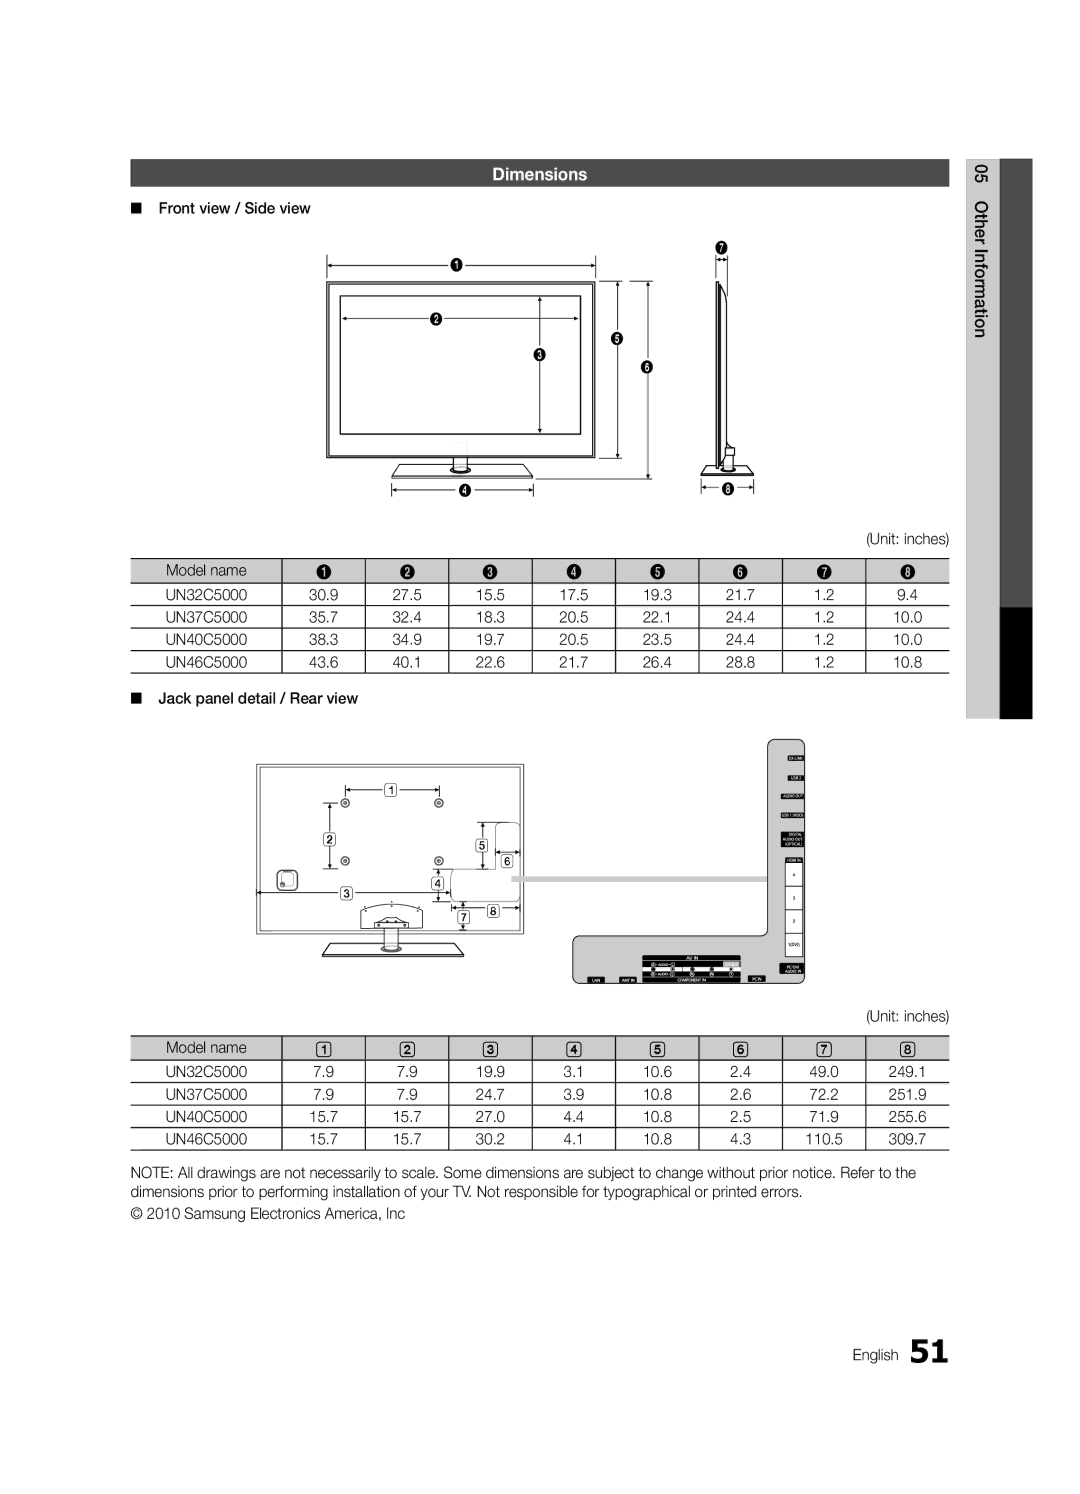 Samsung BN68-02625B-02, Series C5, UN40C5000 user manual Dimensions 